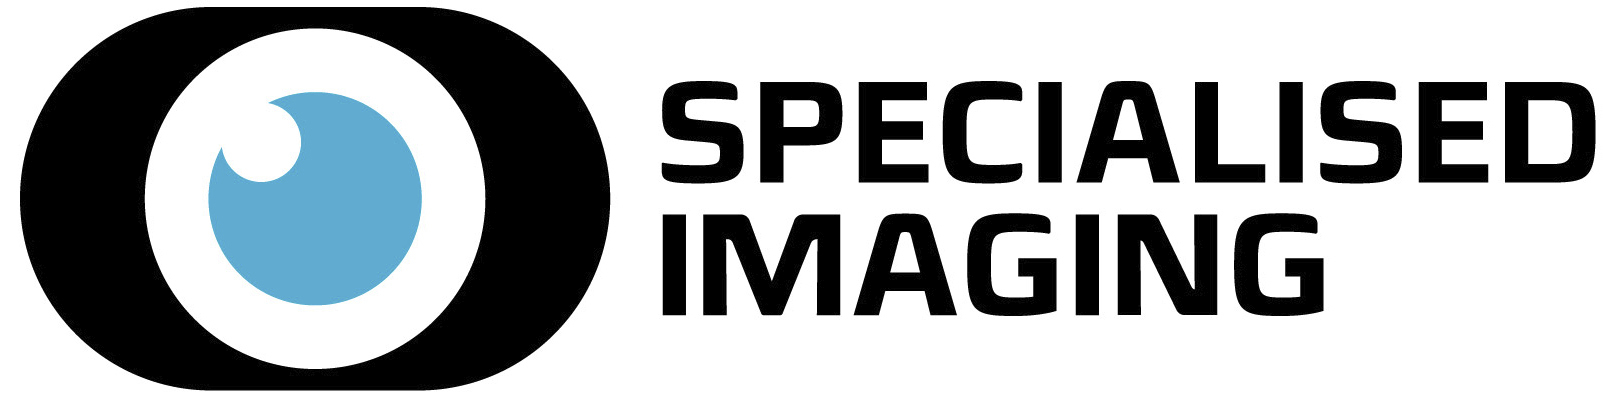 Specialised Imaging, Inc. Logo